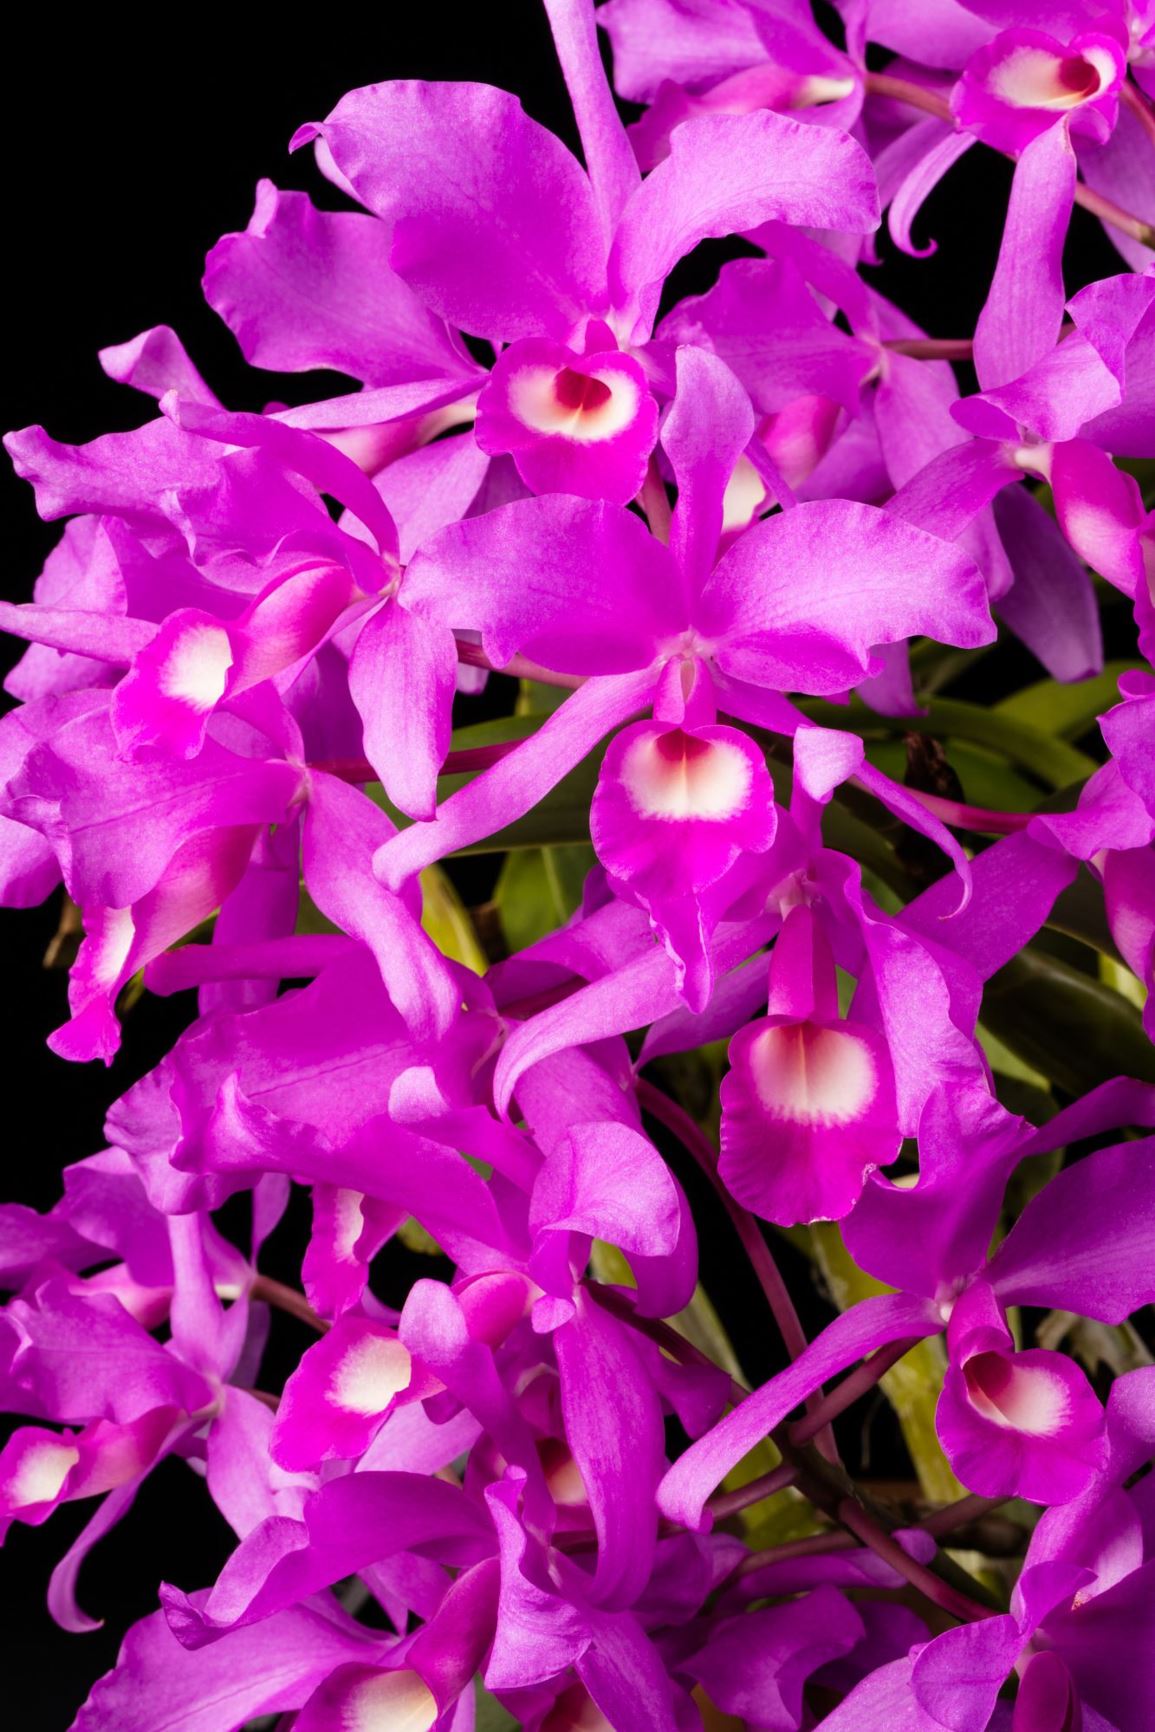 Guarianthe skinneri - Guaria Morada, Candelaria, Flor de San Sebastian, Skinner's Guarianthe, The Easter Orchid